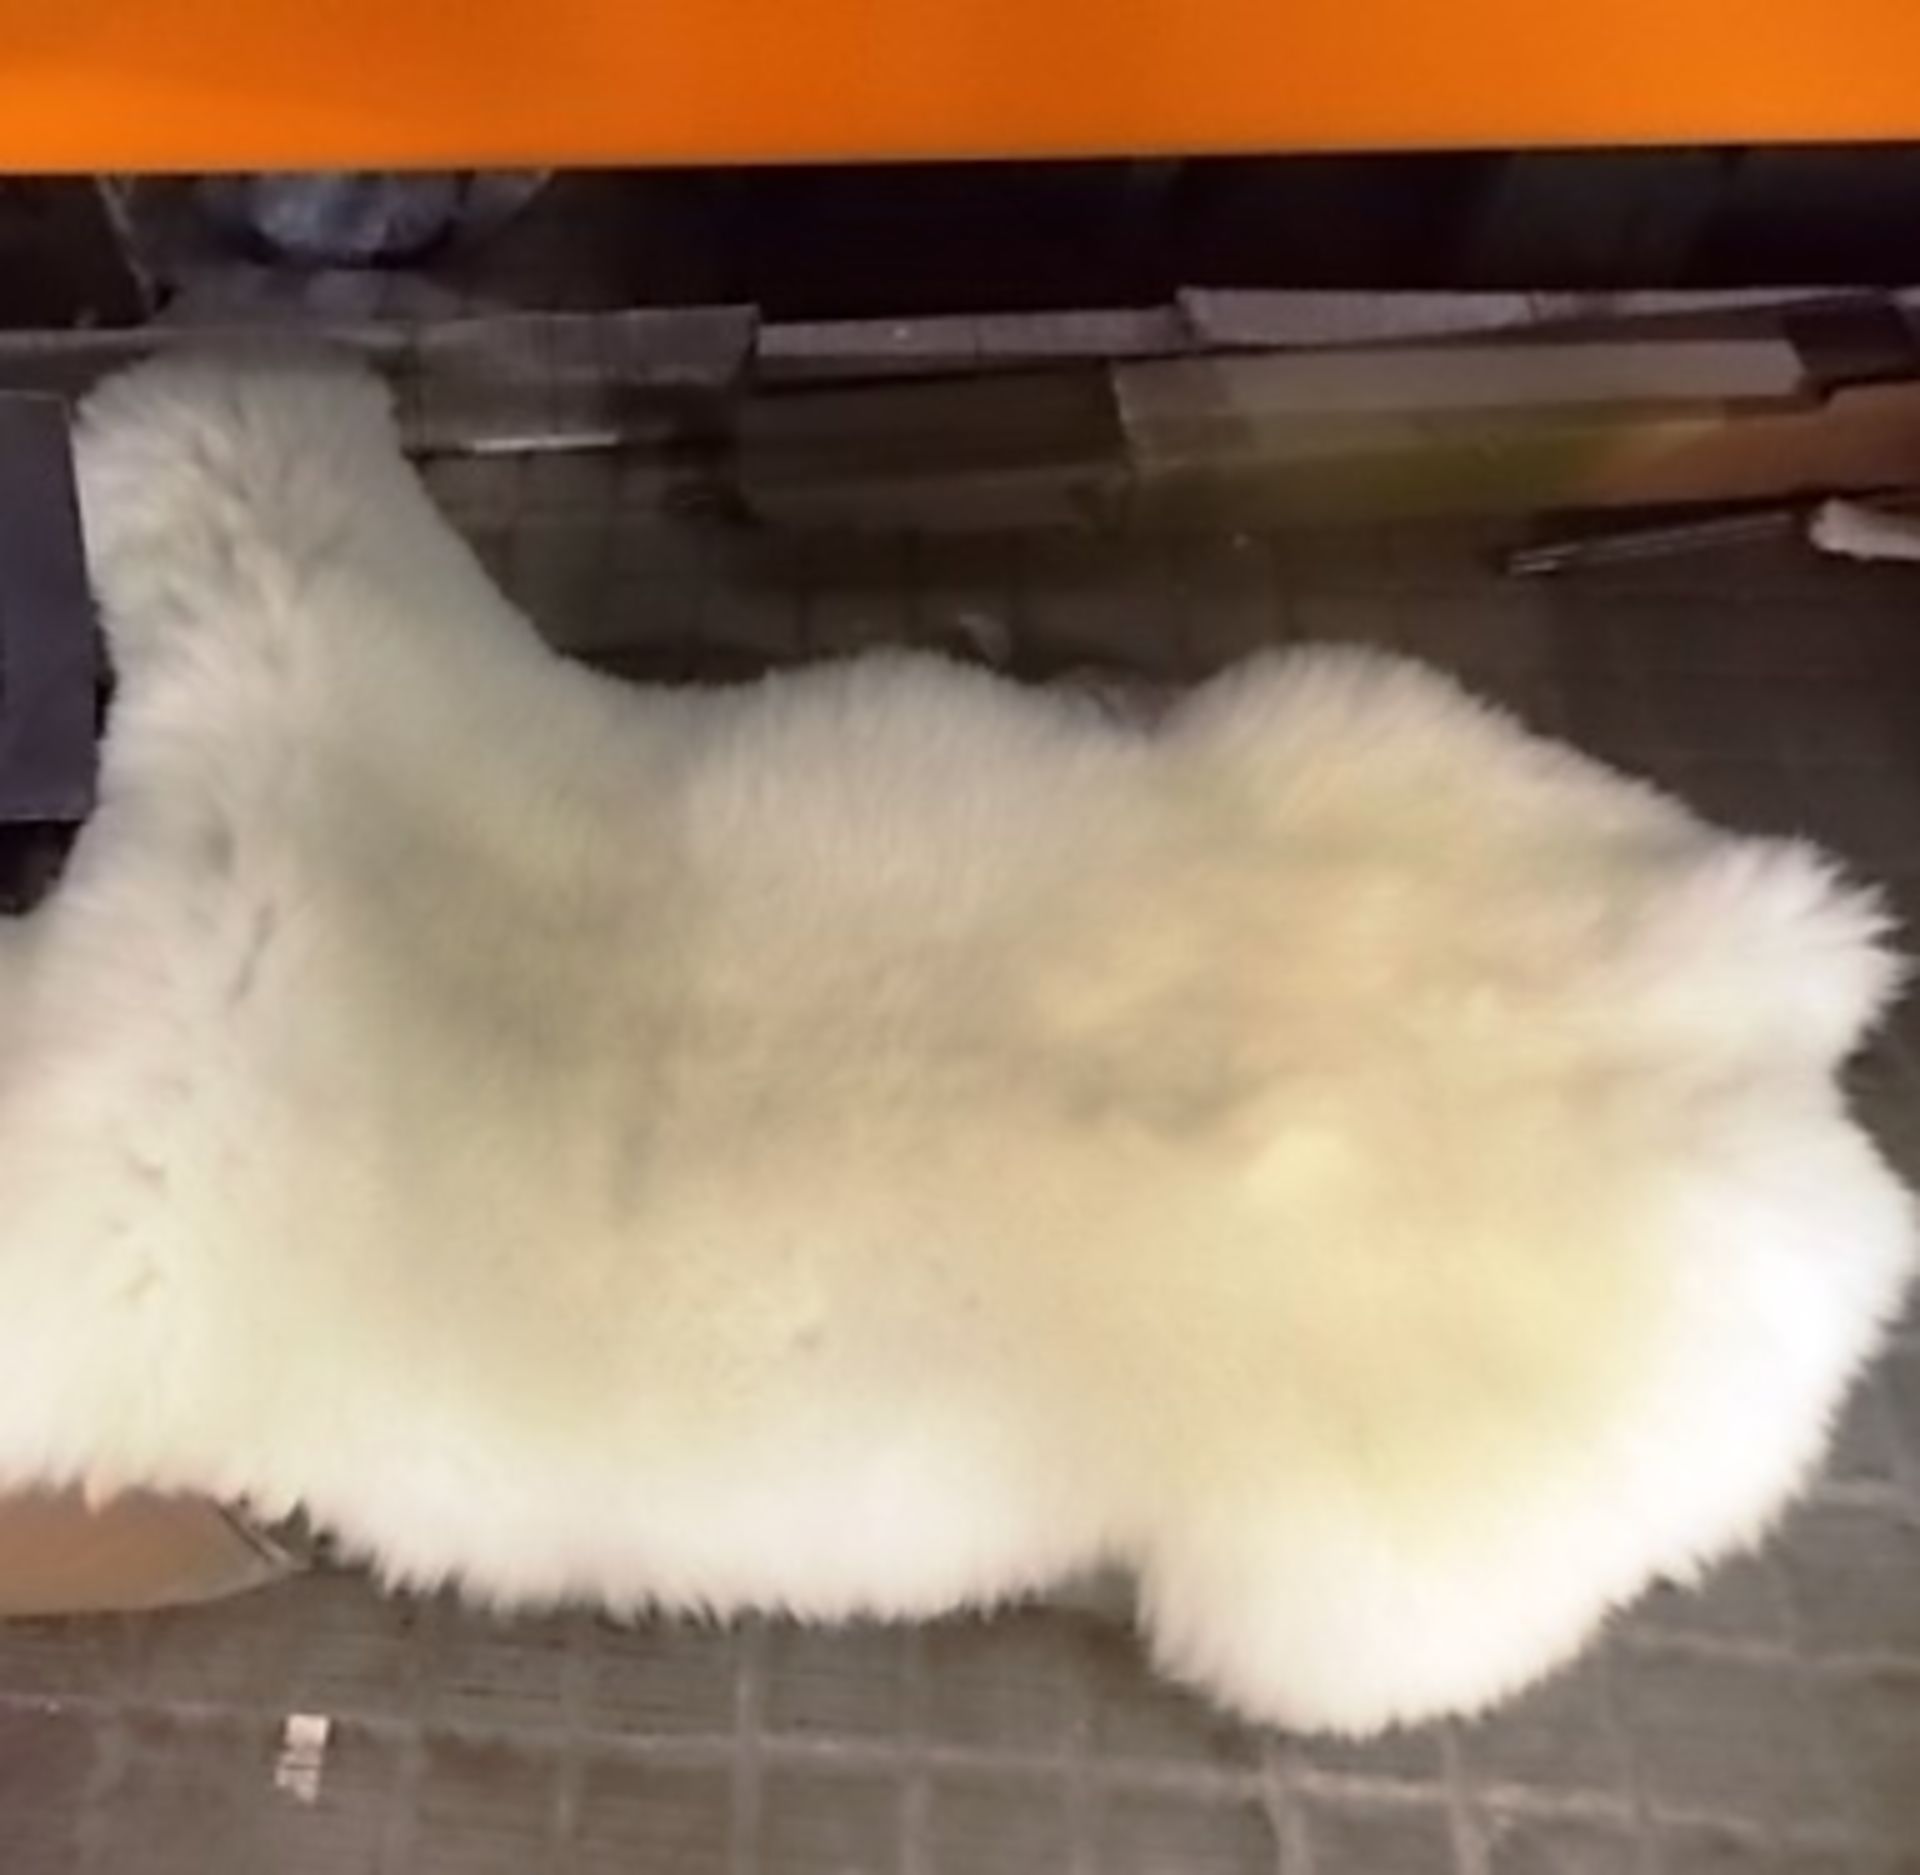 1 x Cream coloured sheep pelt, approx 4ft x 2.5ft - New